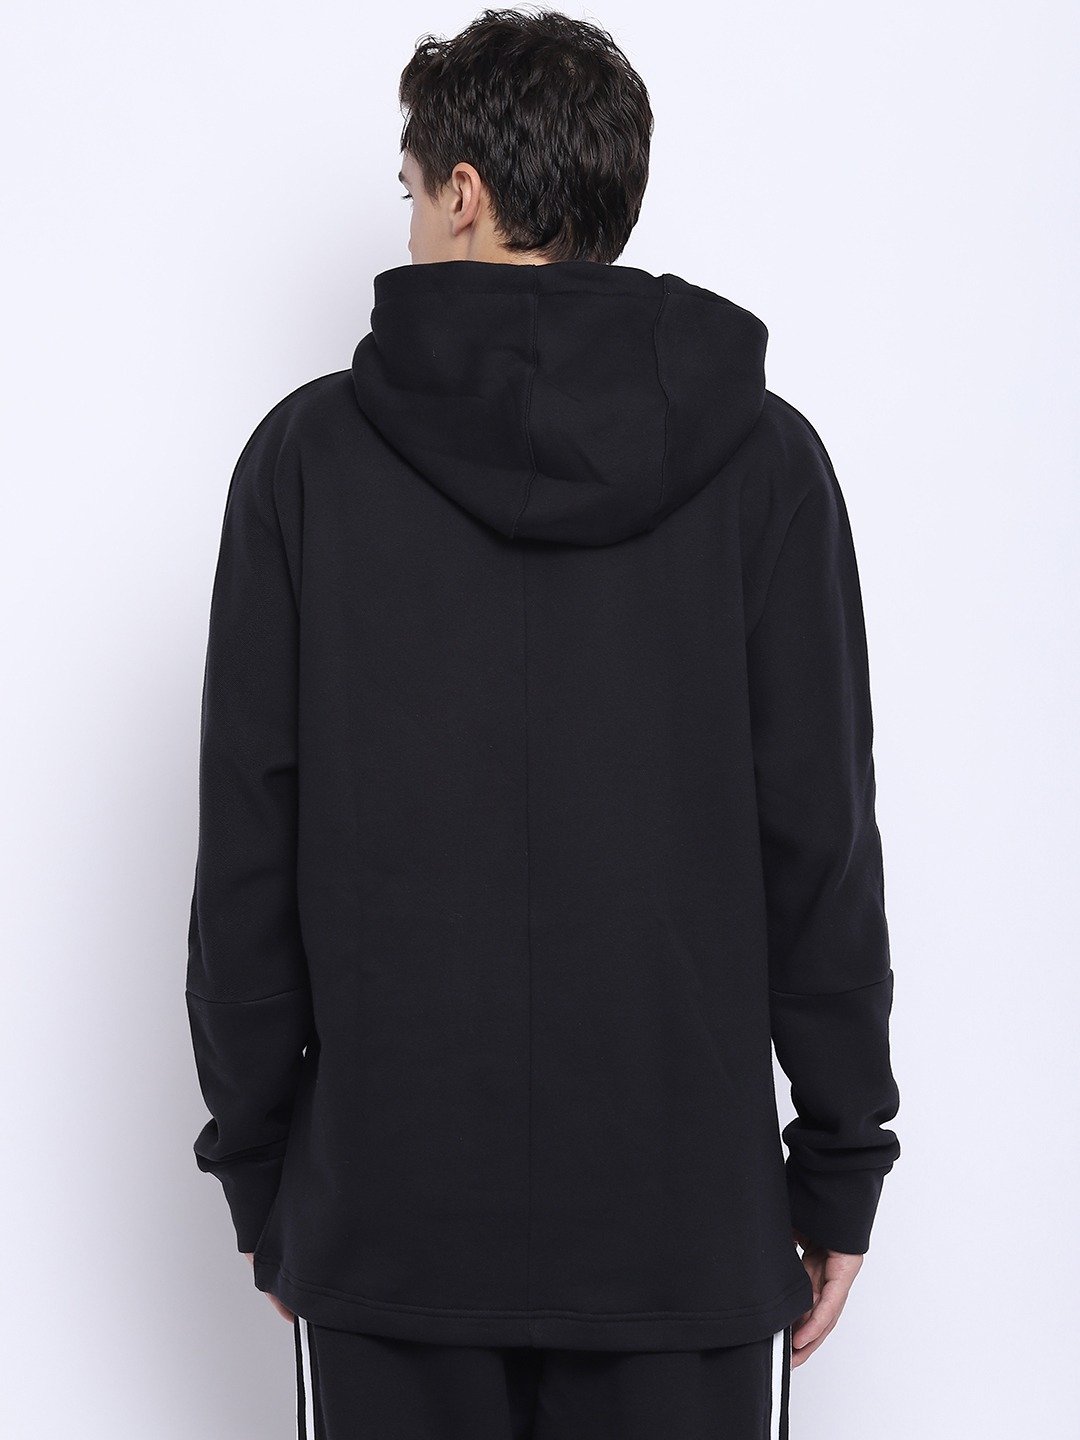 Men Black NMD Hooded Sweatshirt - Discount Store